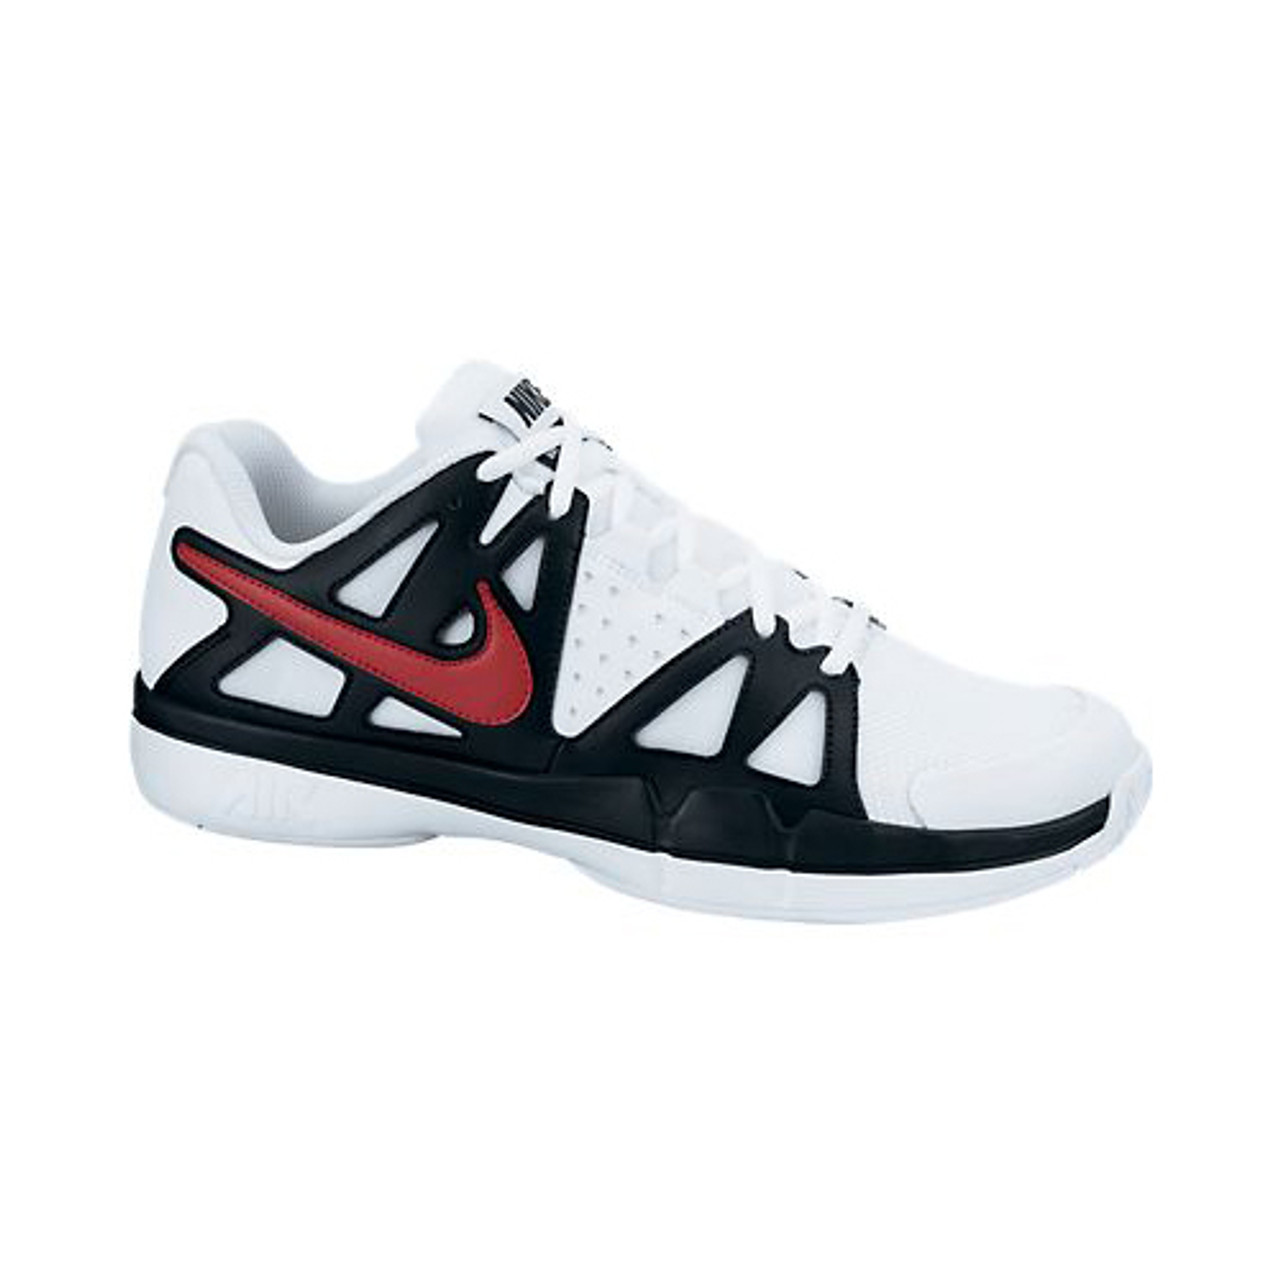 Nike Vapor Advantage White/Black/Red Tennis Shoes - White/Black/Gym Red | Discount Nike Men's Athletic & More - |